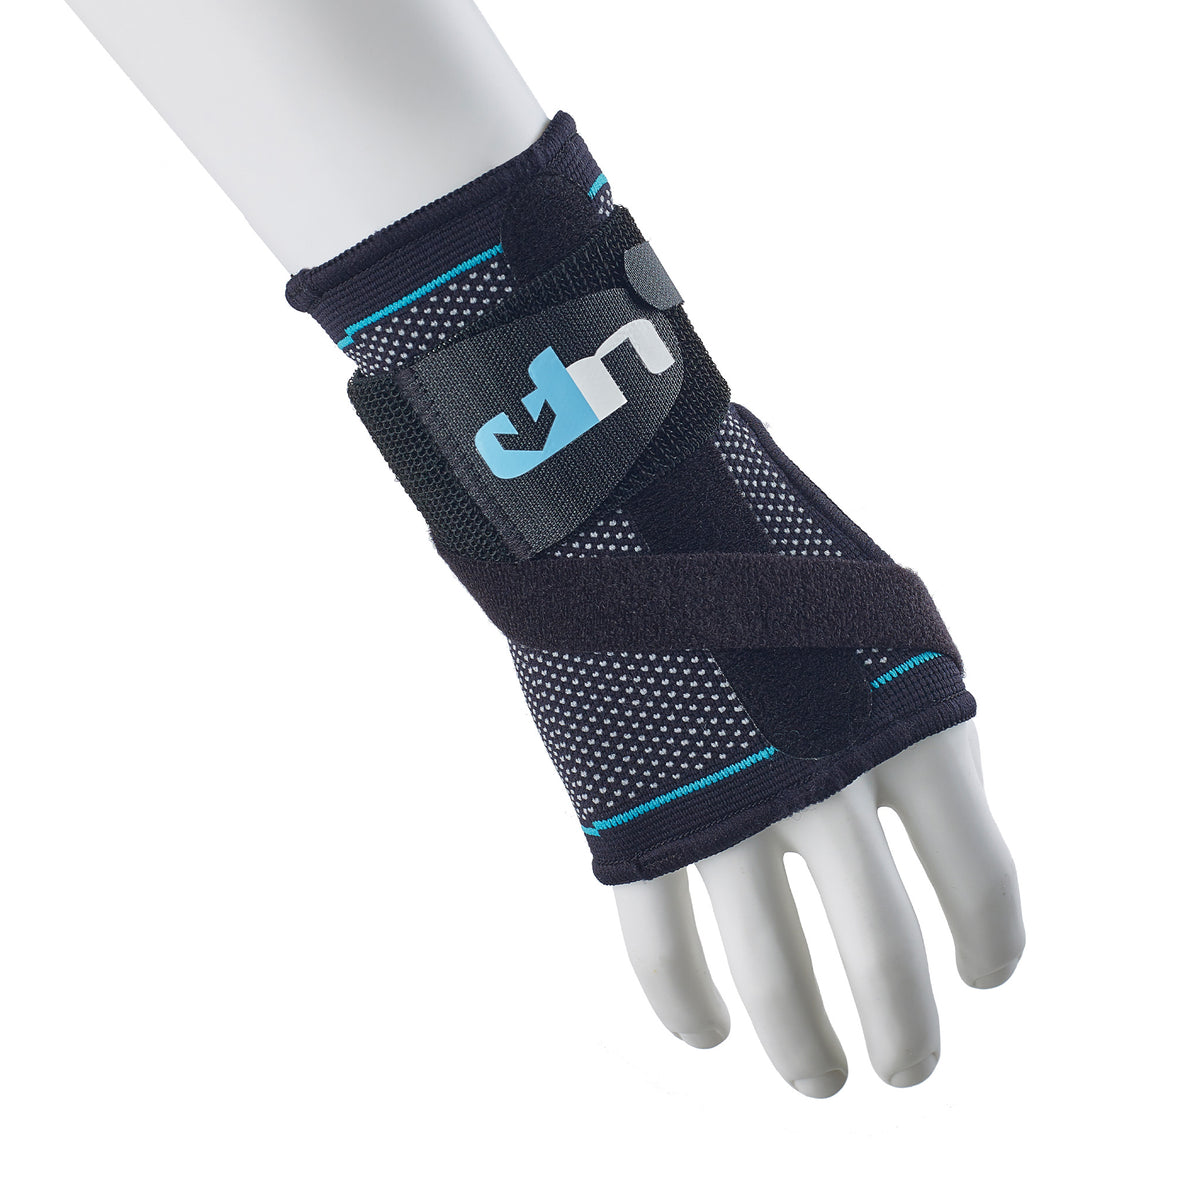 Ultimate Performance Advanced Compression Wrist Brace w/Splint